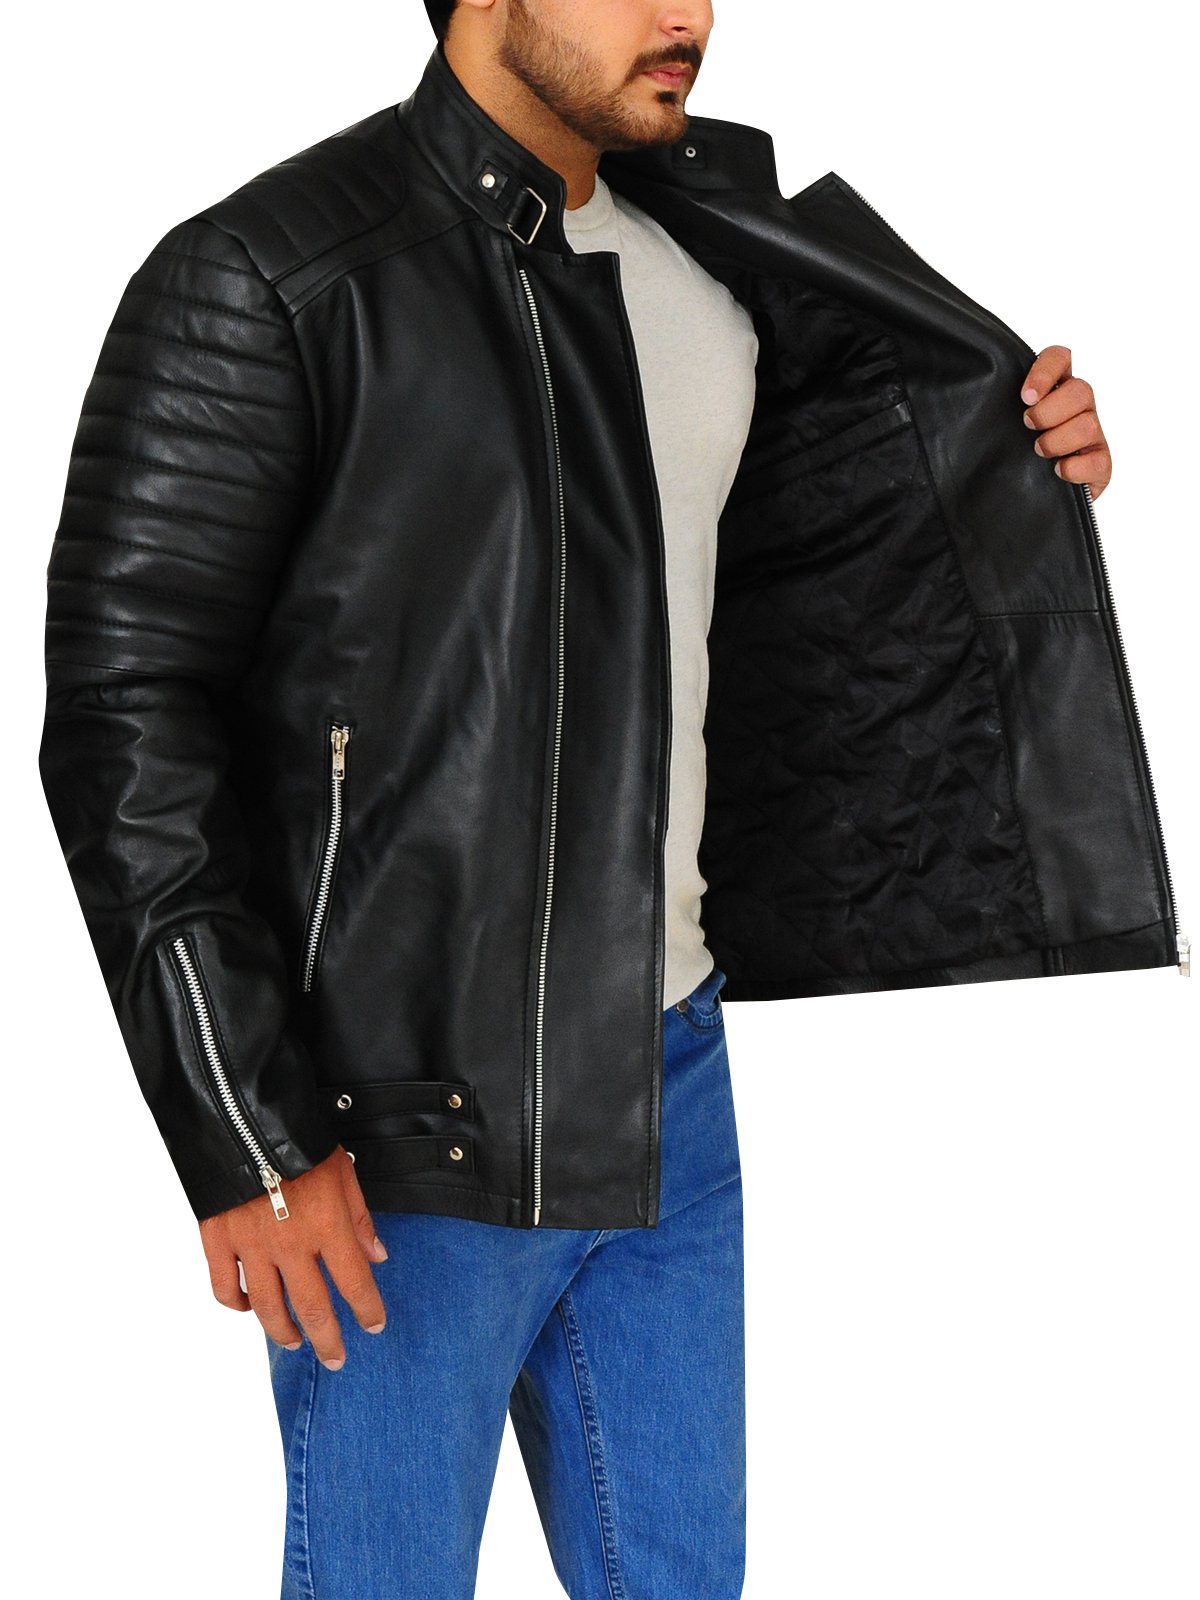 Deadpool Ajax Ed Skrein Black Leather Jacket - A2 Jackets